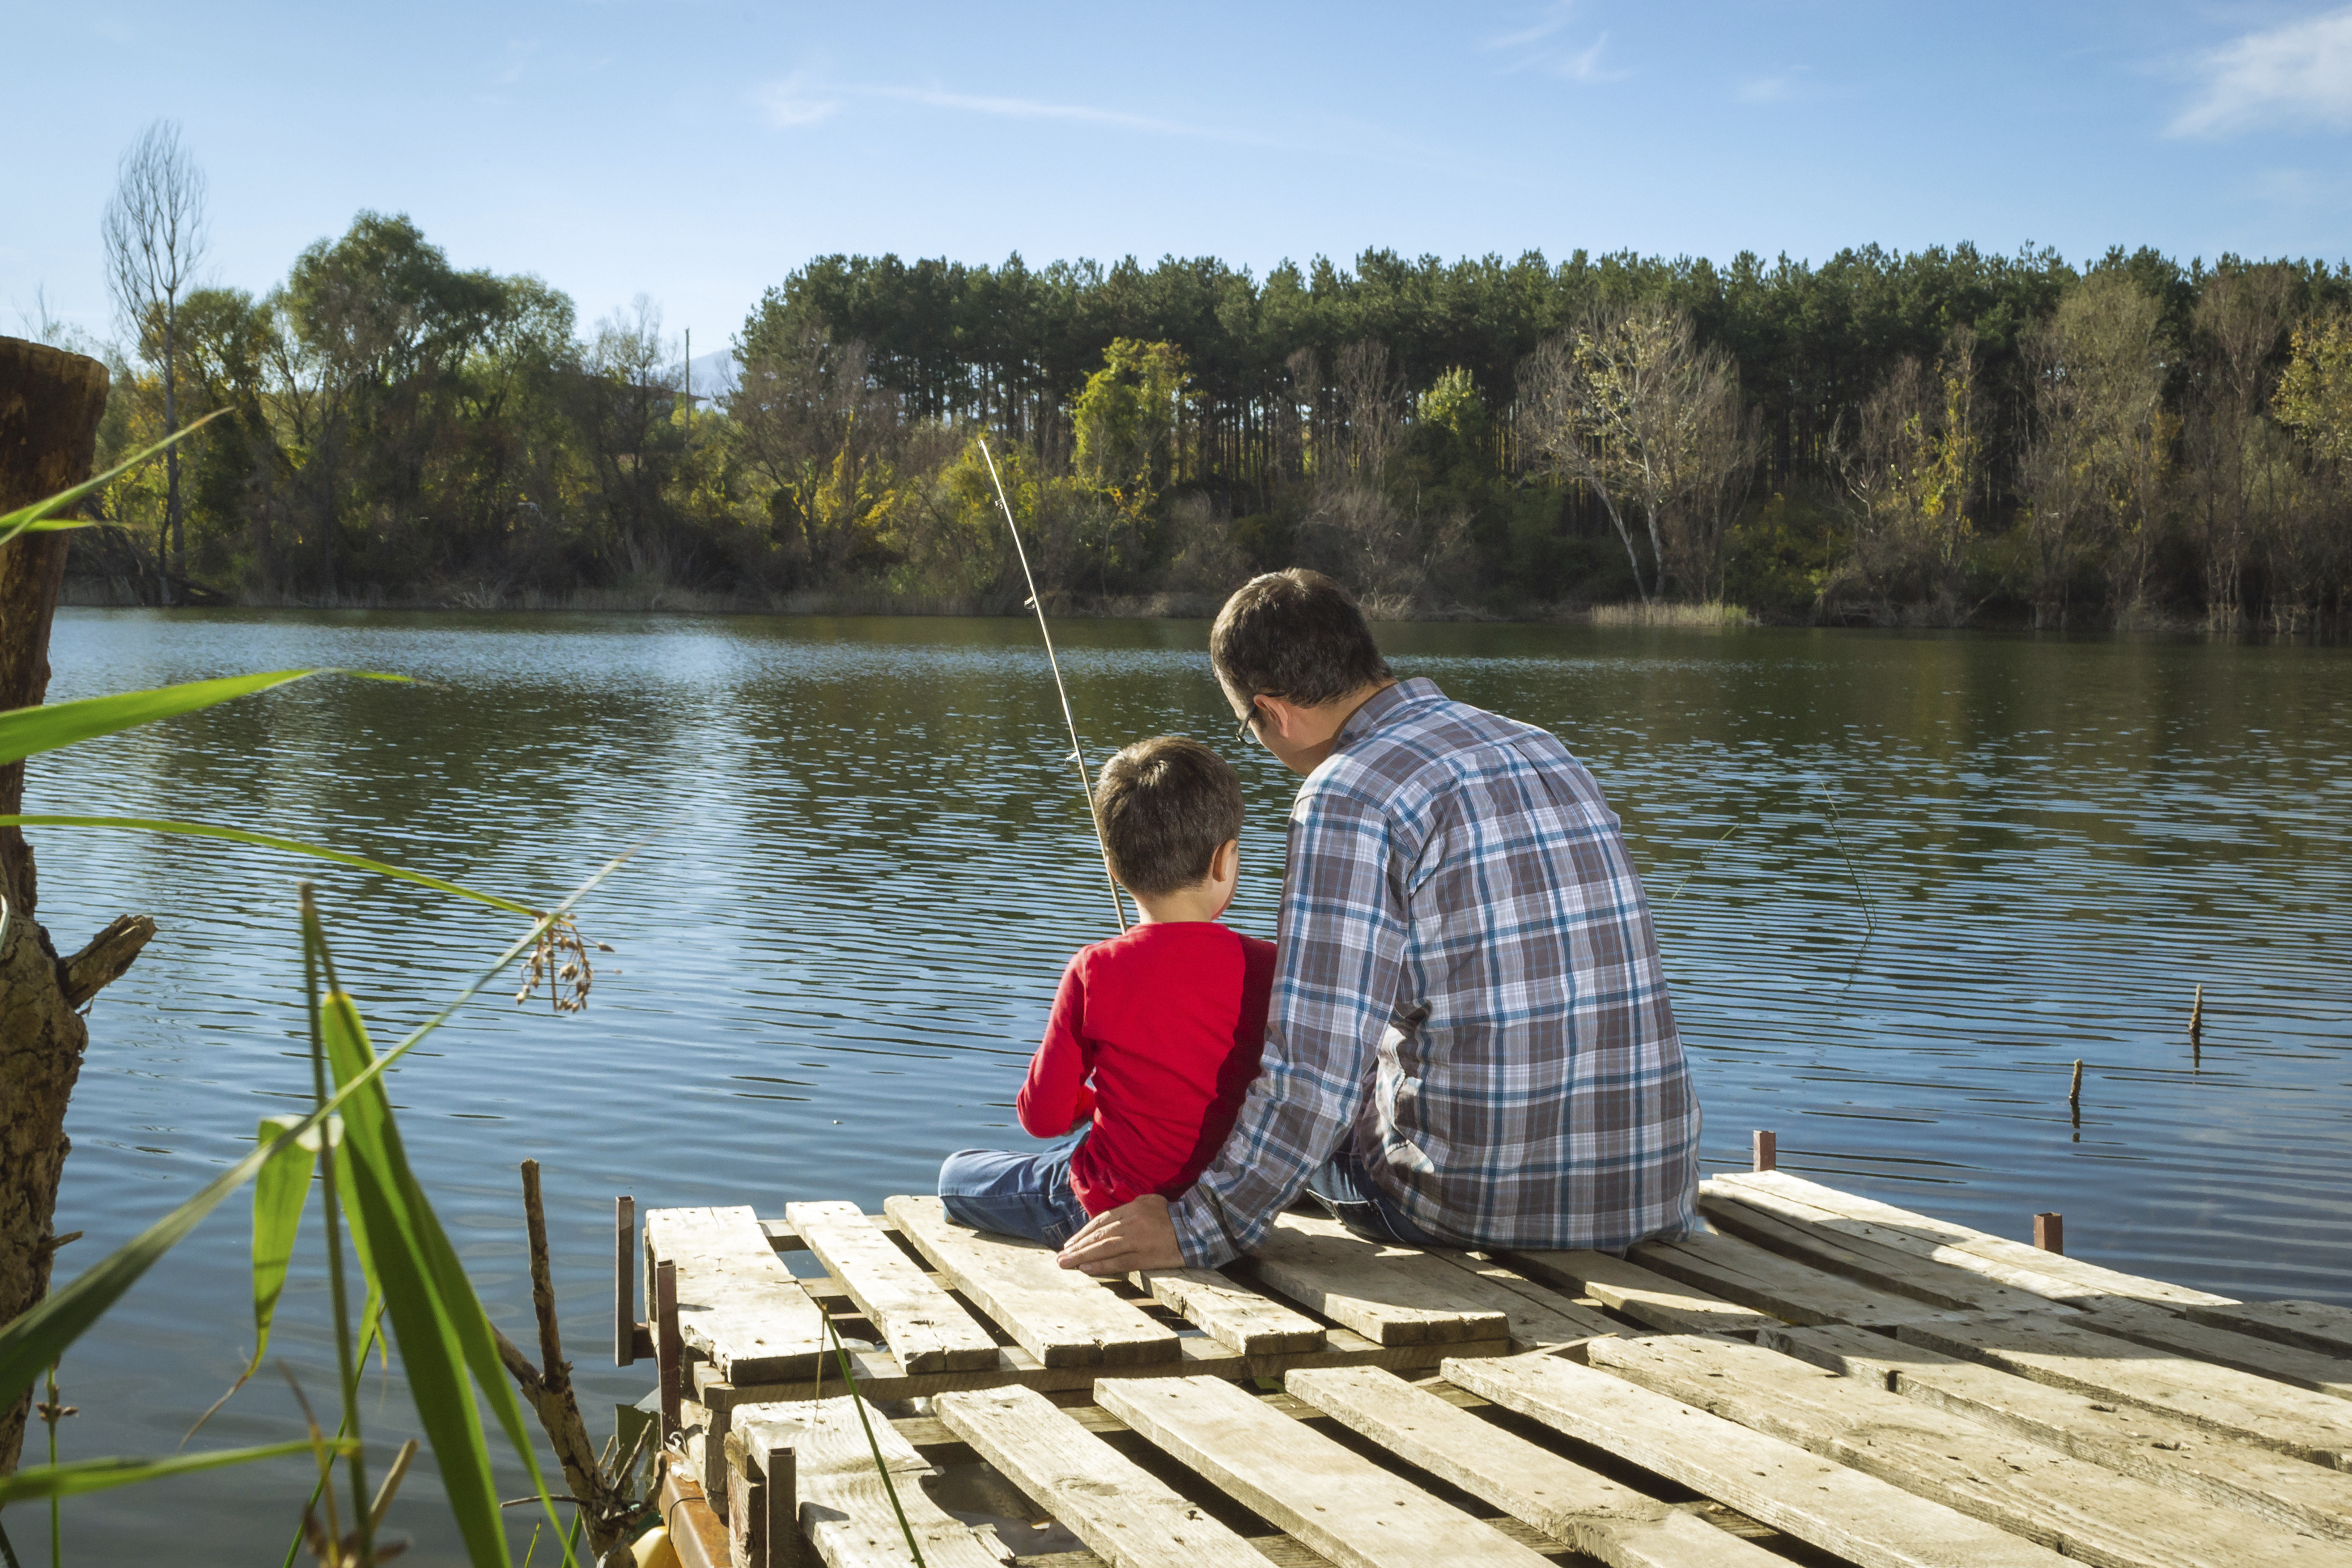 Сын ловит рыбу. Рыбалка летом. Отец и сын на рыбалке. Рыбалка фото. Семья на рыбалке.